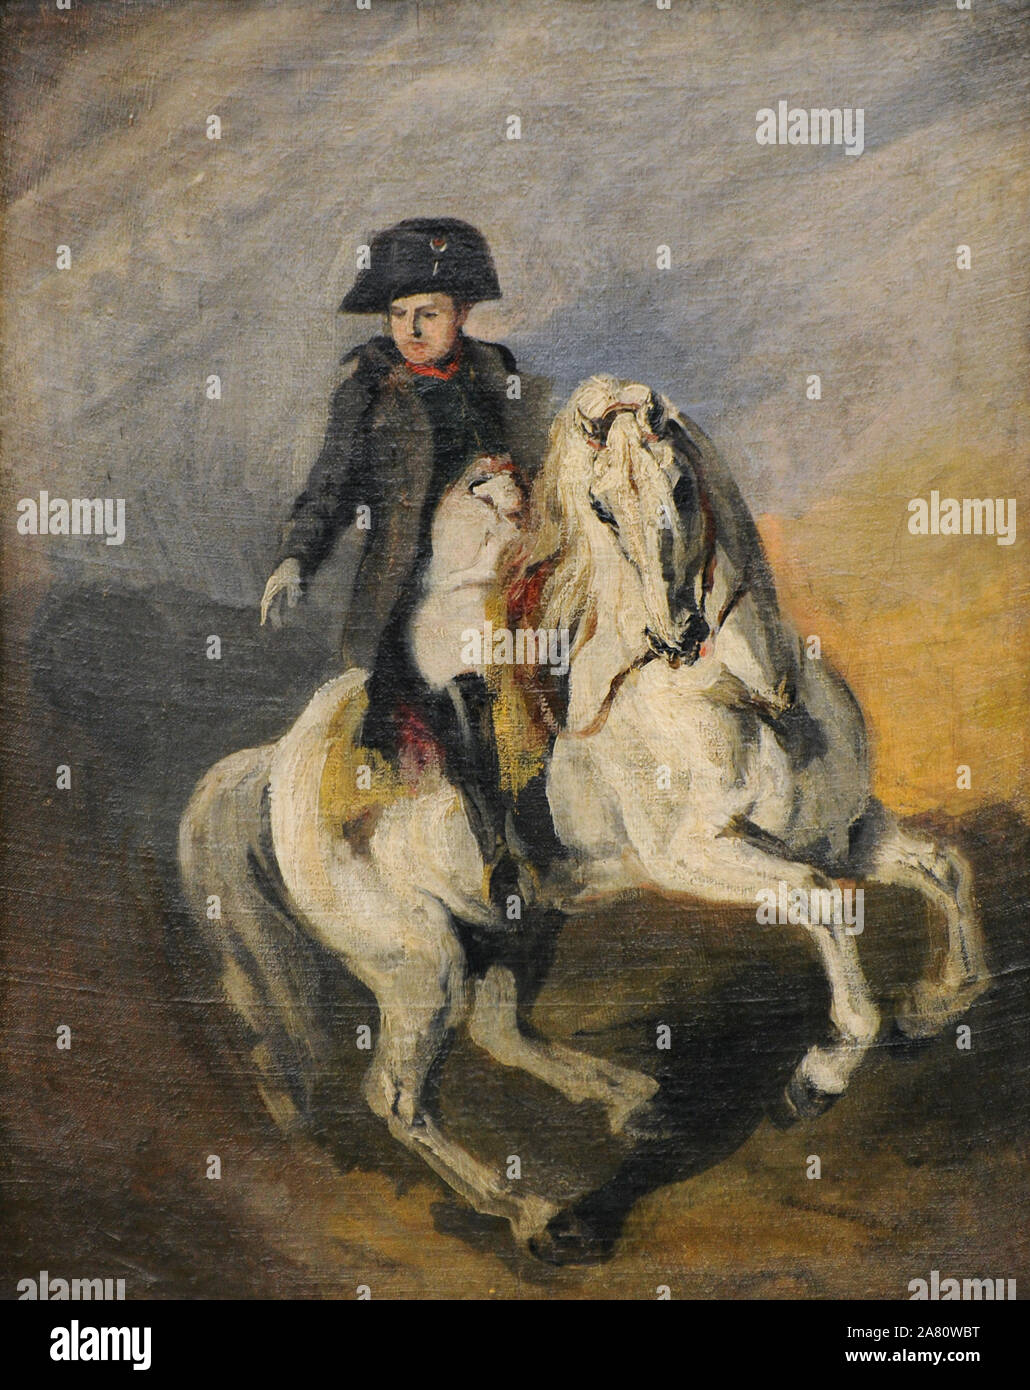 Piotr Michalowski (1800-1855). Polish painter. Napoleon on a Grey Horse, before 1846. 19th Century Polish Art Gallery (Sukiennice Museum). National Museum of Krakow. Poland. Stock Photo